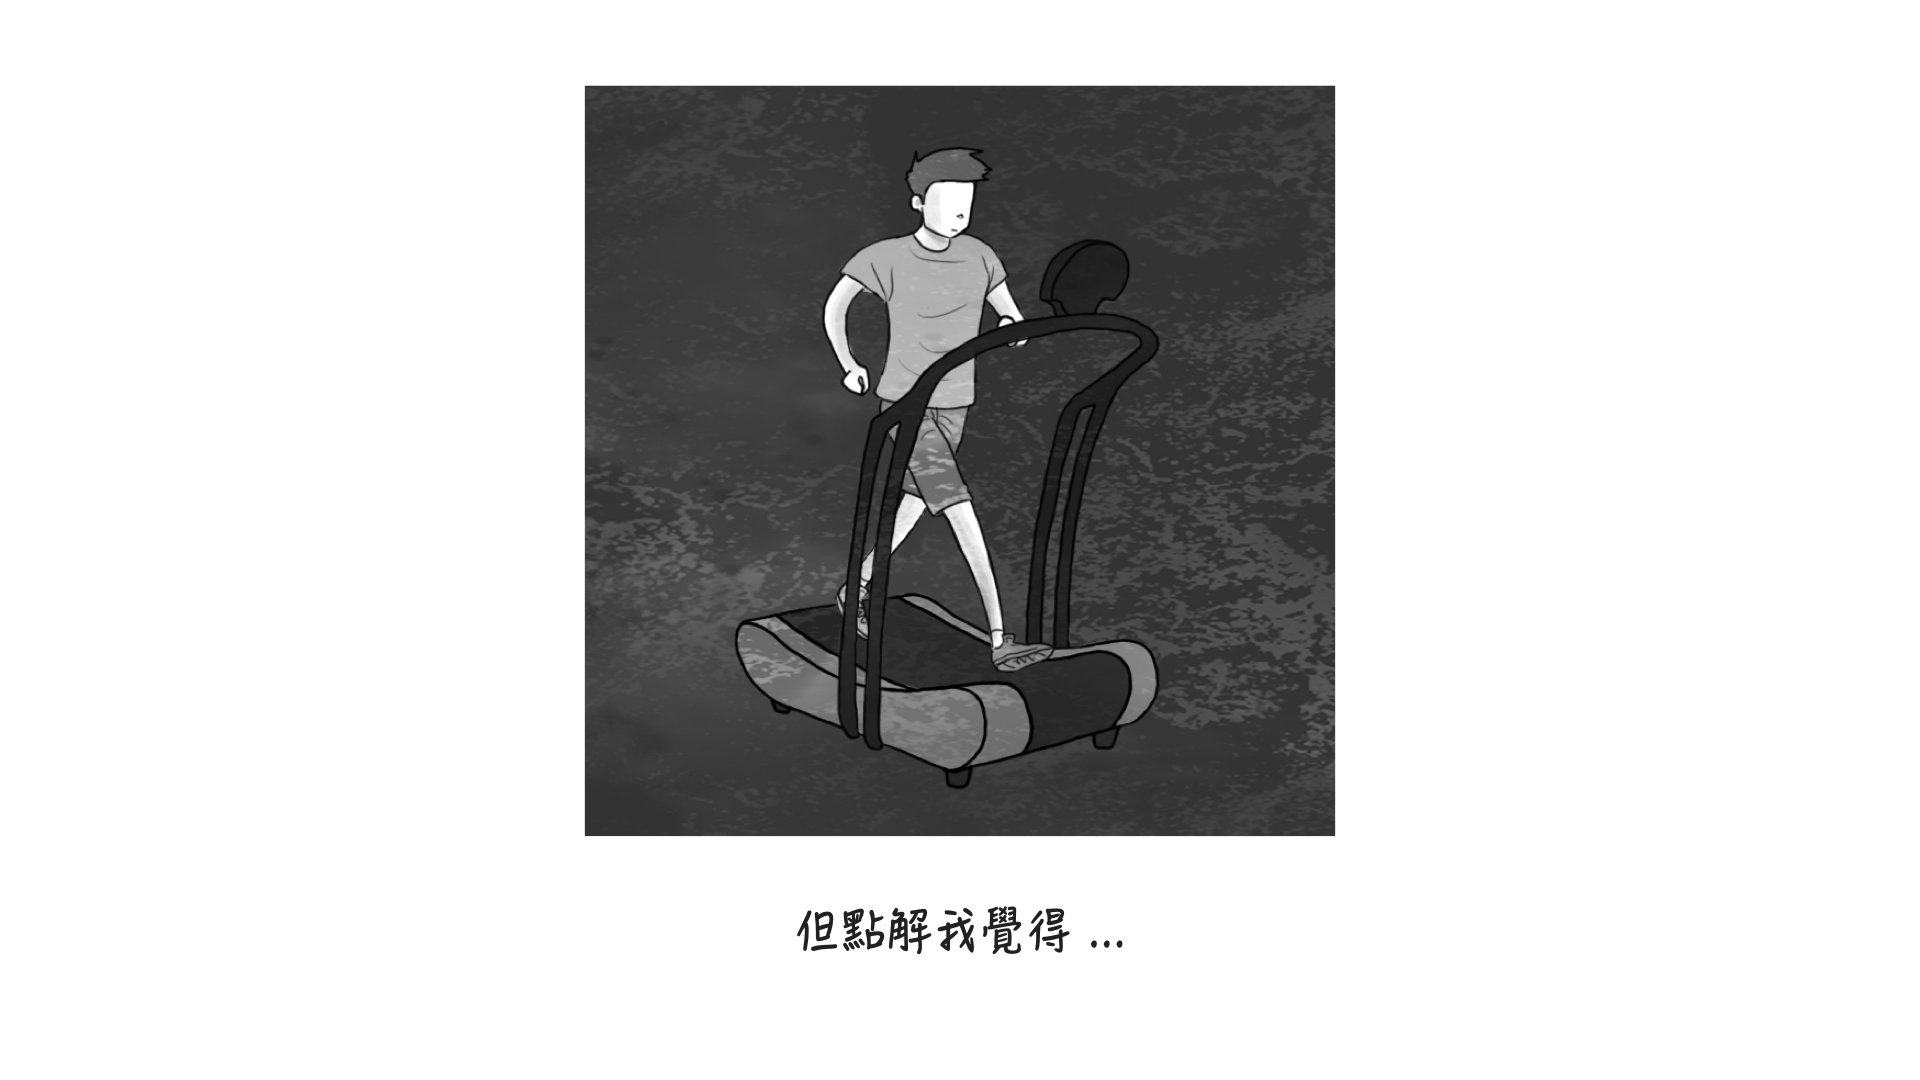 PP_Comic_Chinese_HK.020.jpeg